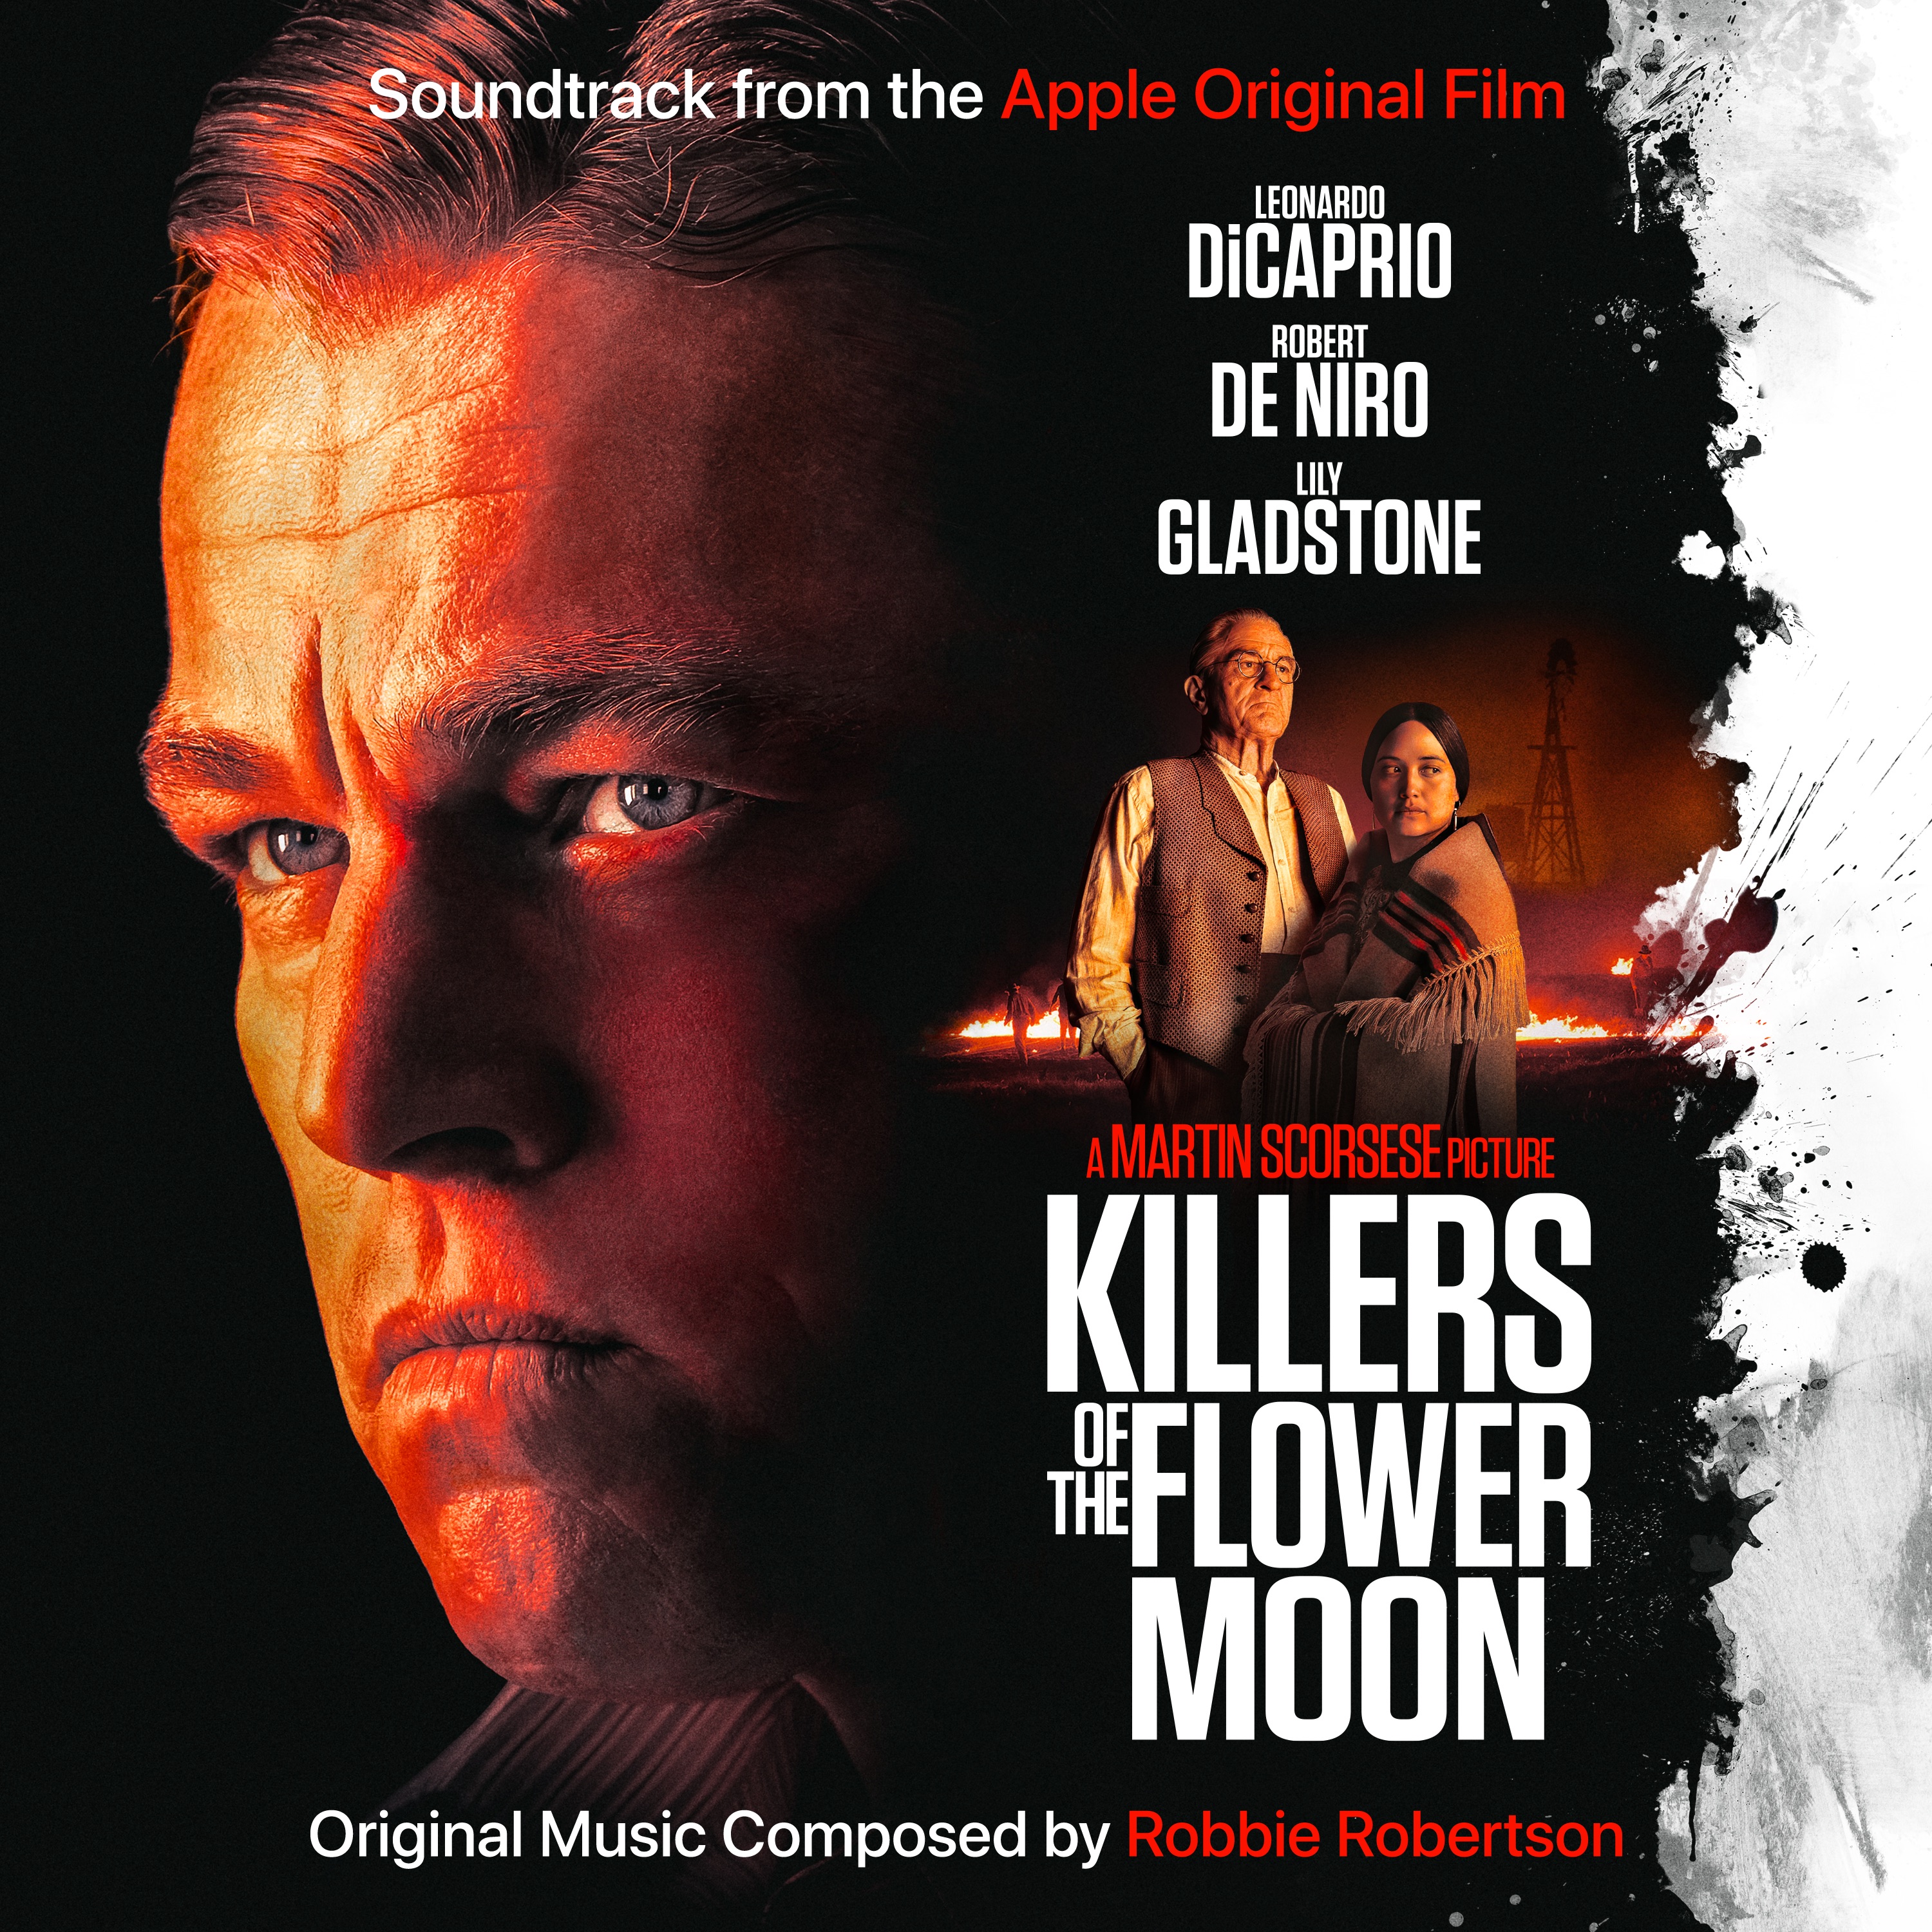 Killers of the Flower Moon (Soundtrack). Mooned soundtrack